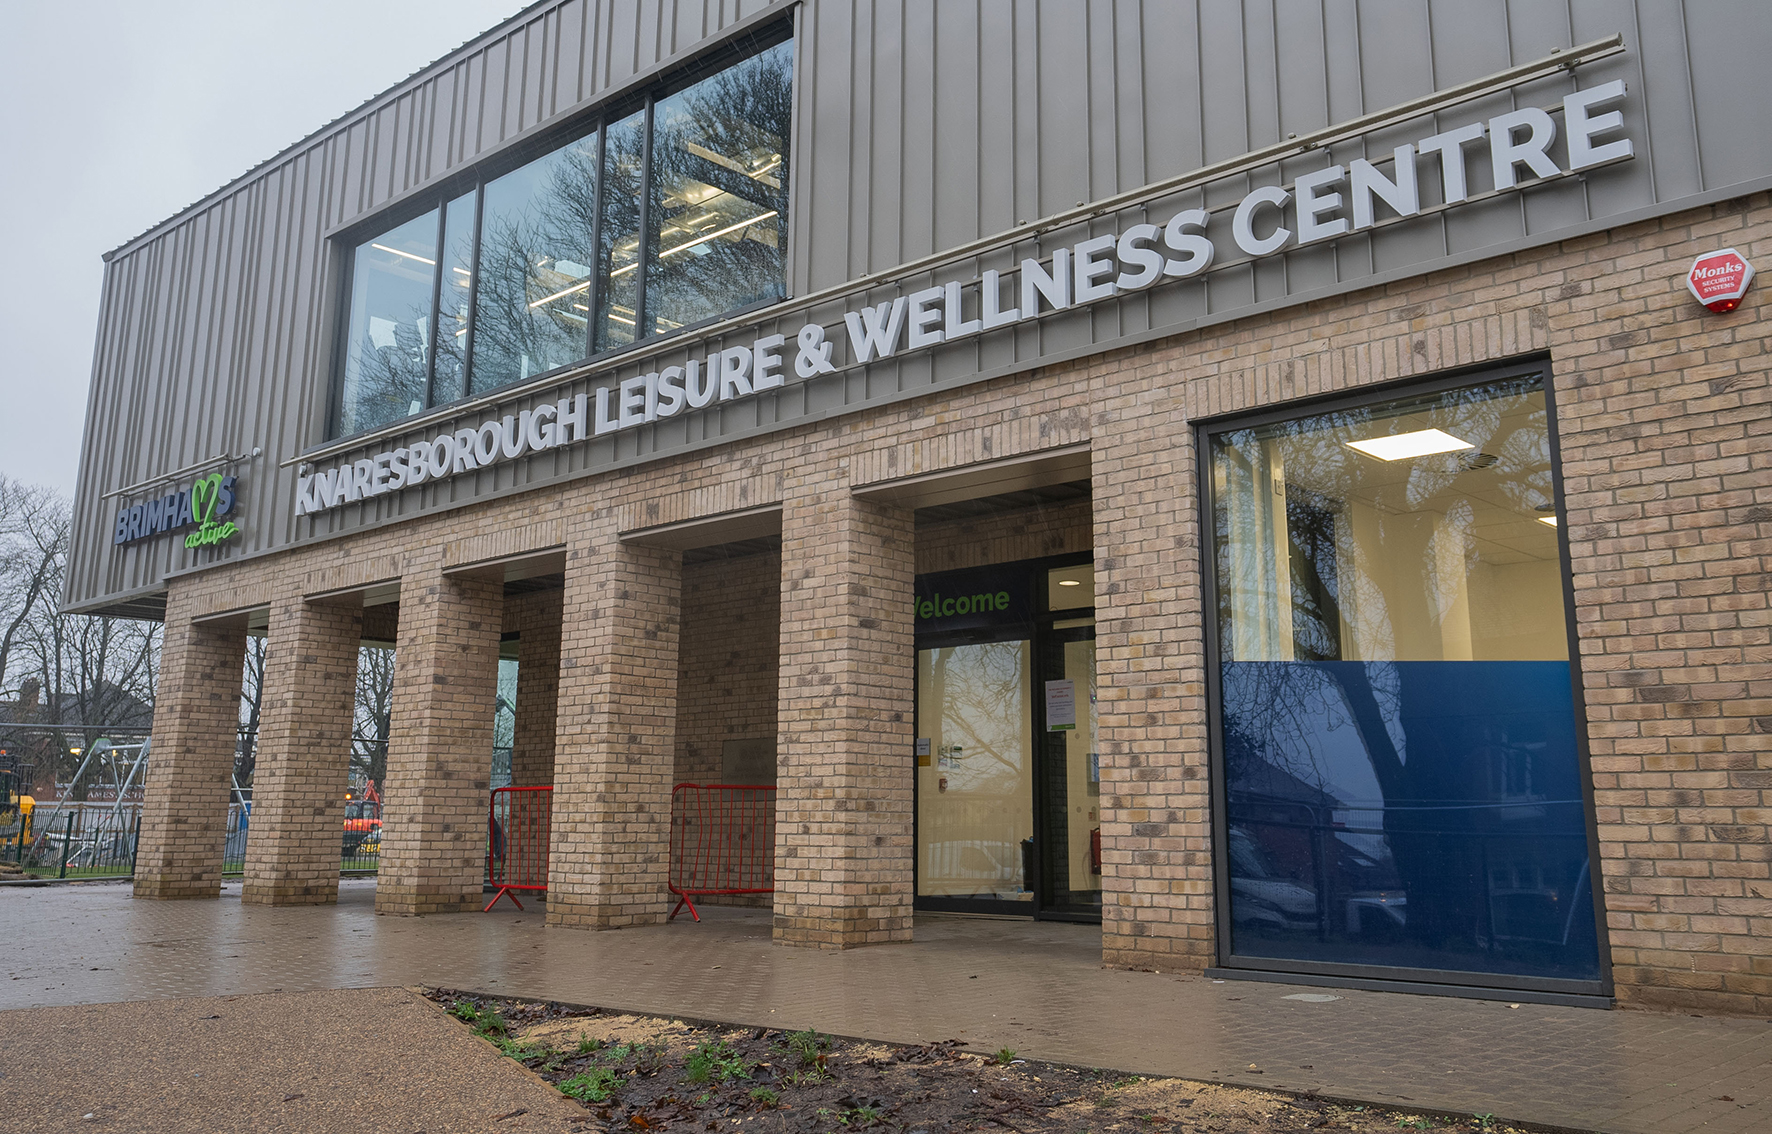 4knaresborough4 New £17.5 million leisure centre gives opportunities for healthier lifestyles